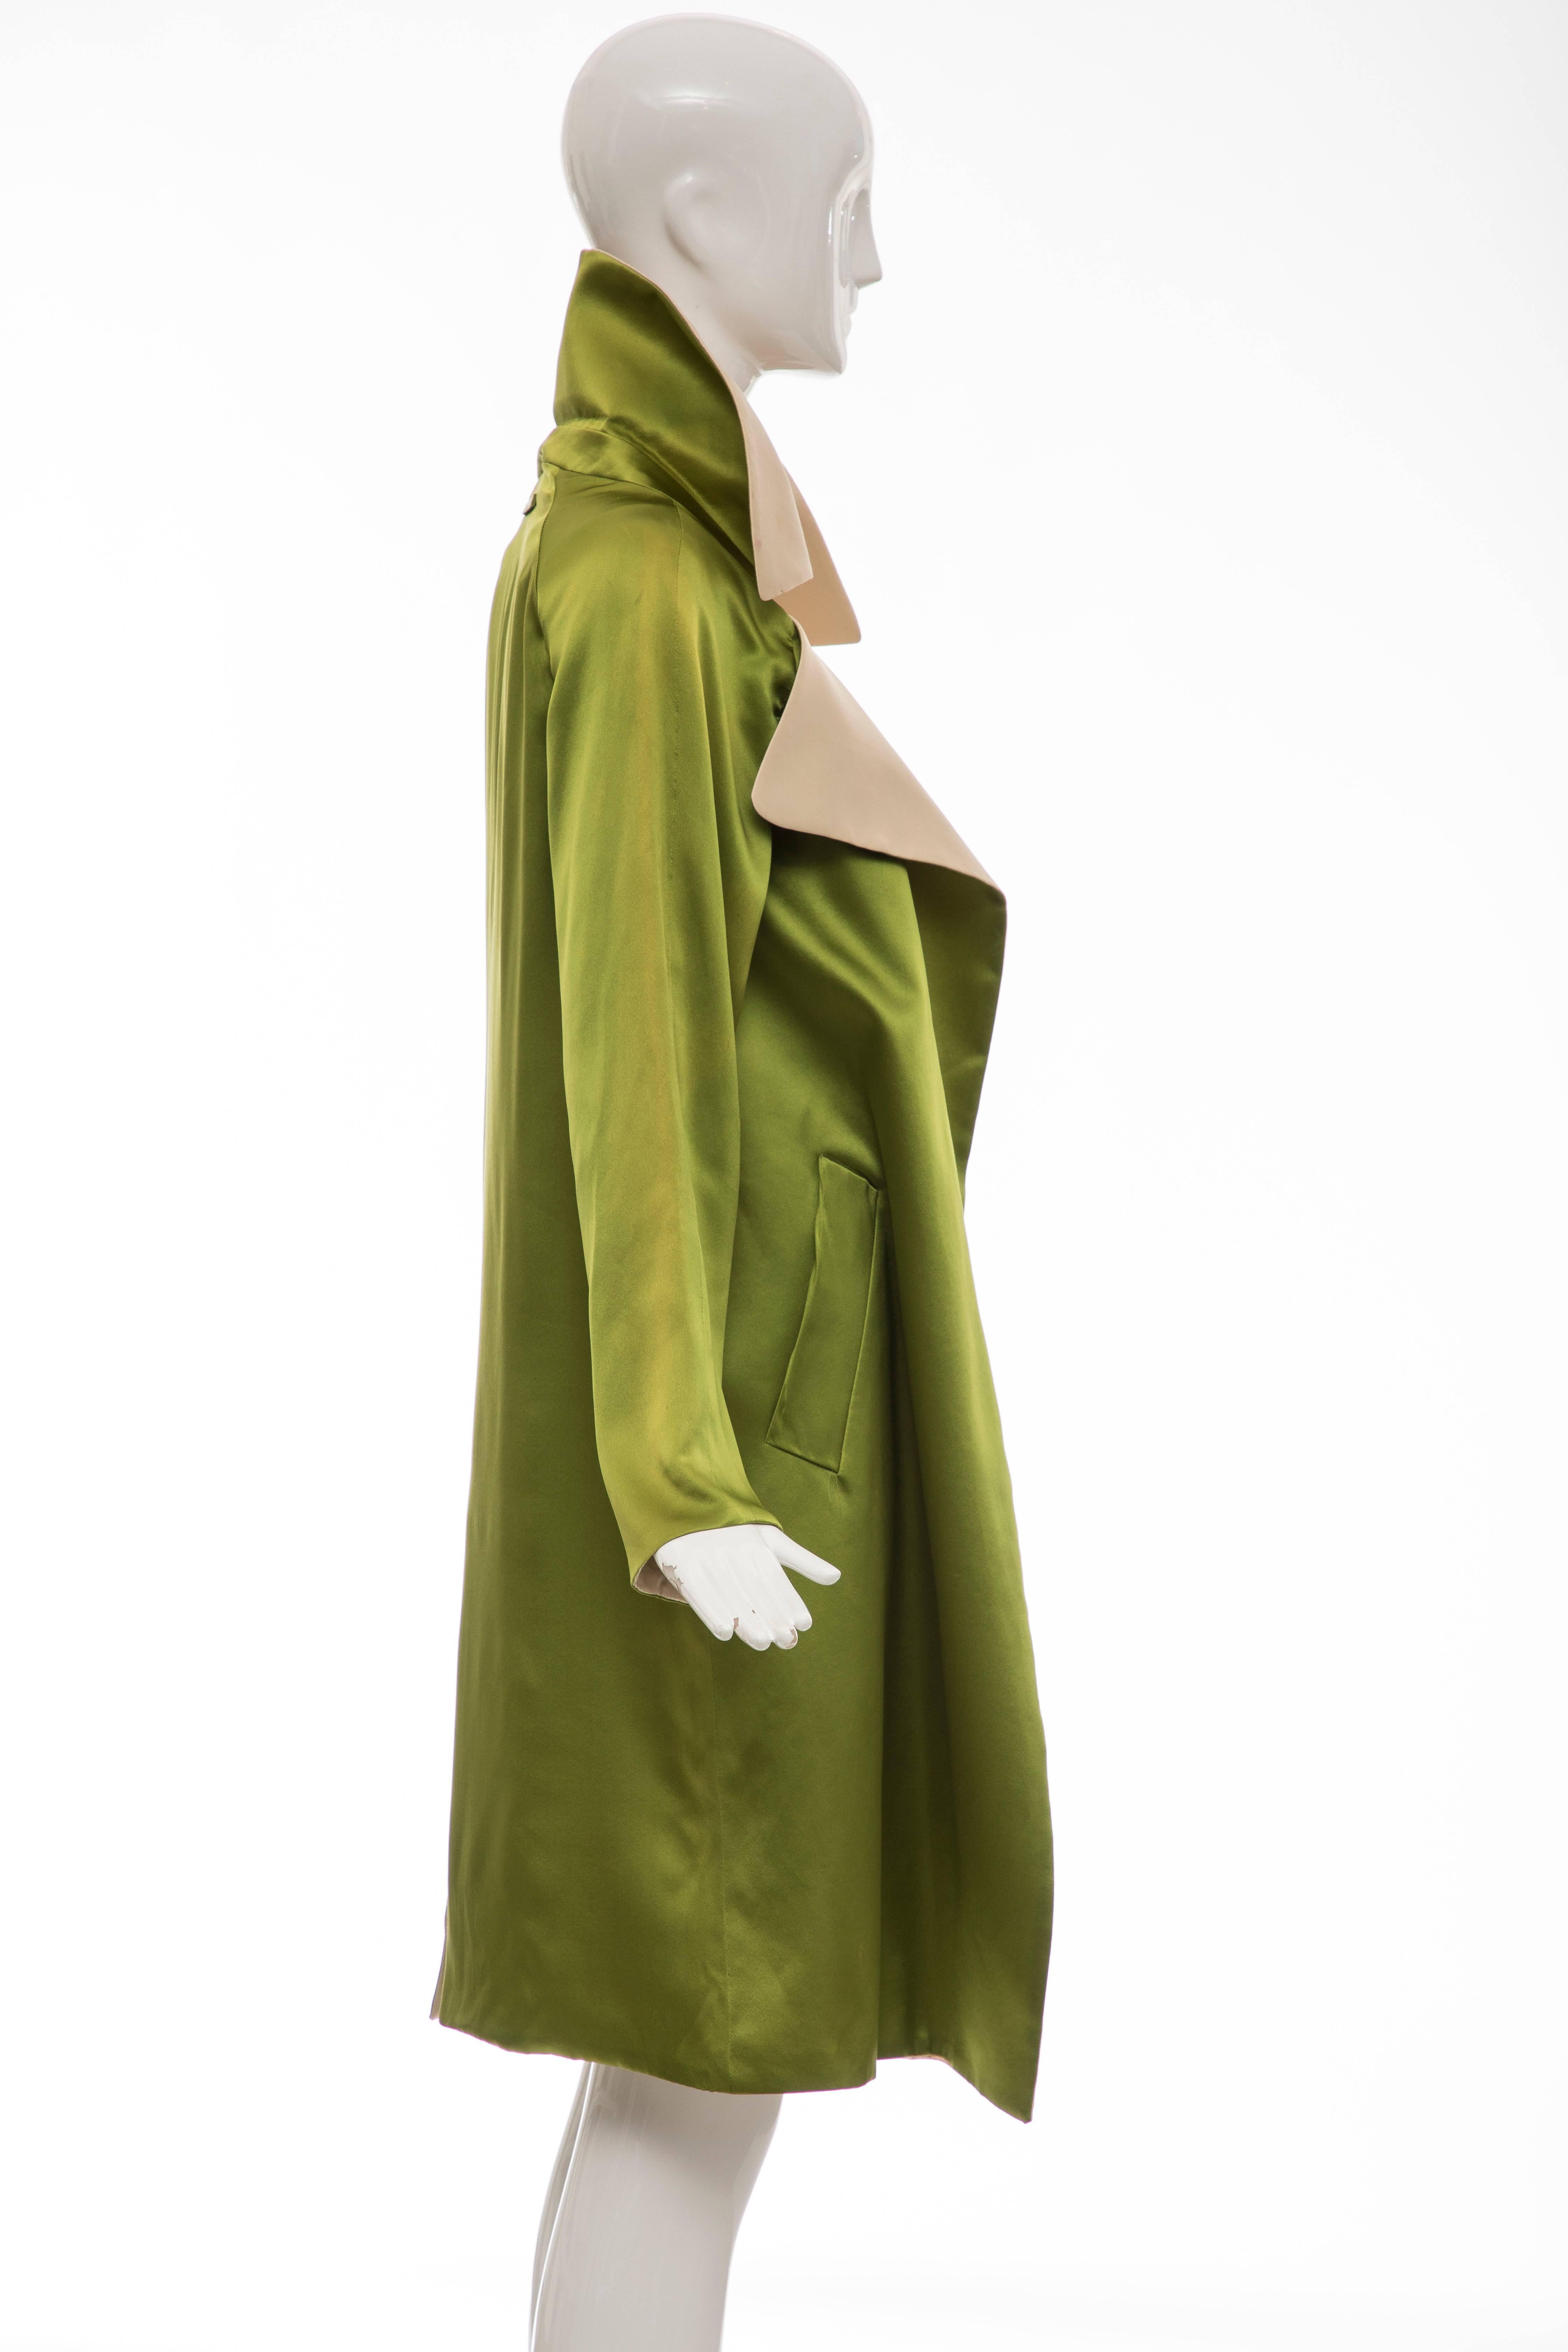 Jean Paul Gaultier Silk Charmeuse Dress Coat, Fall 2010 1